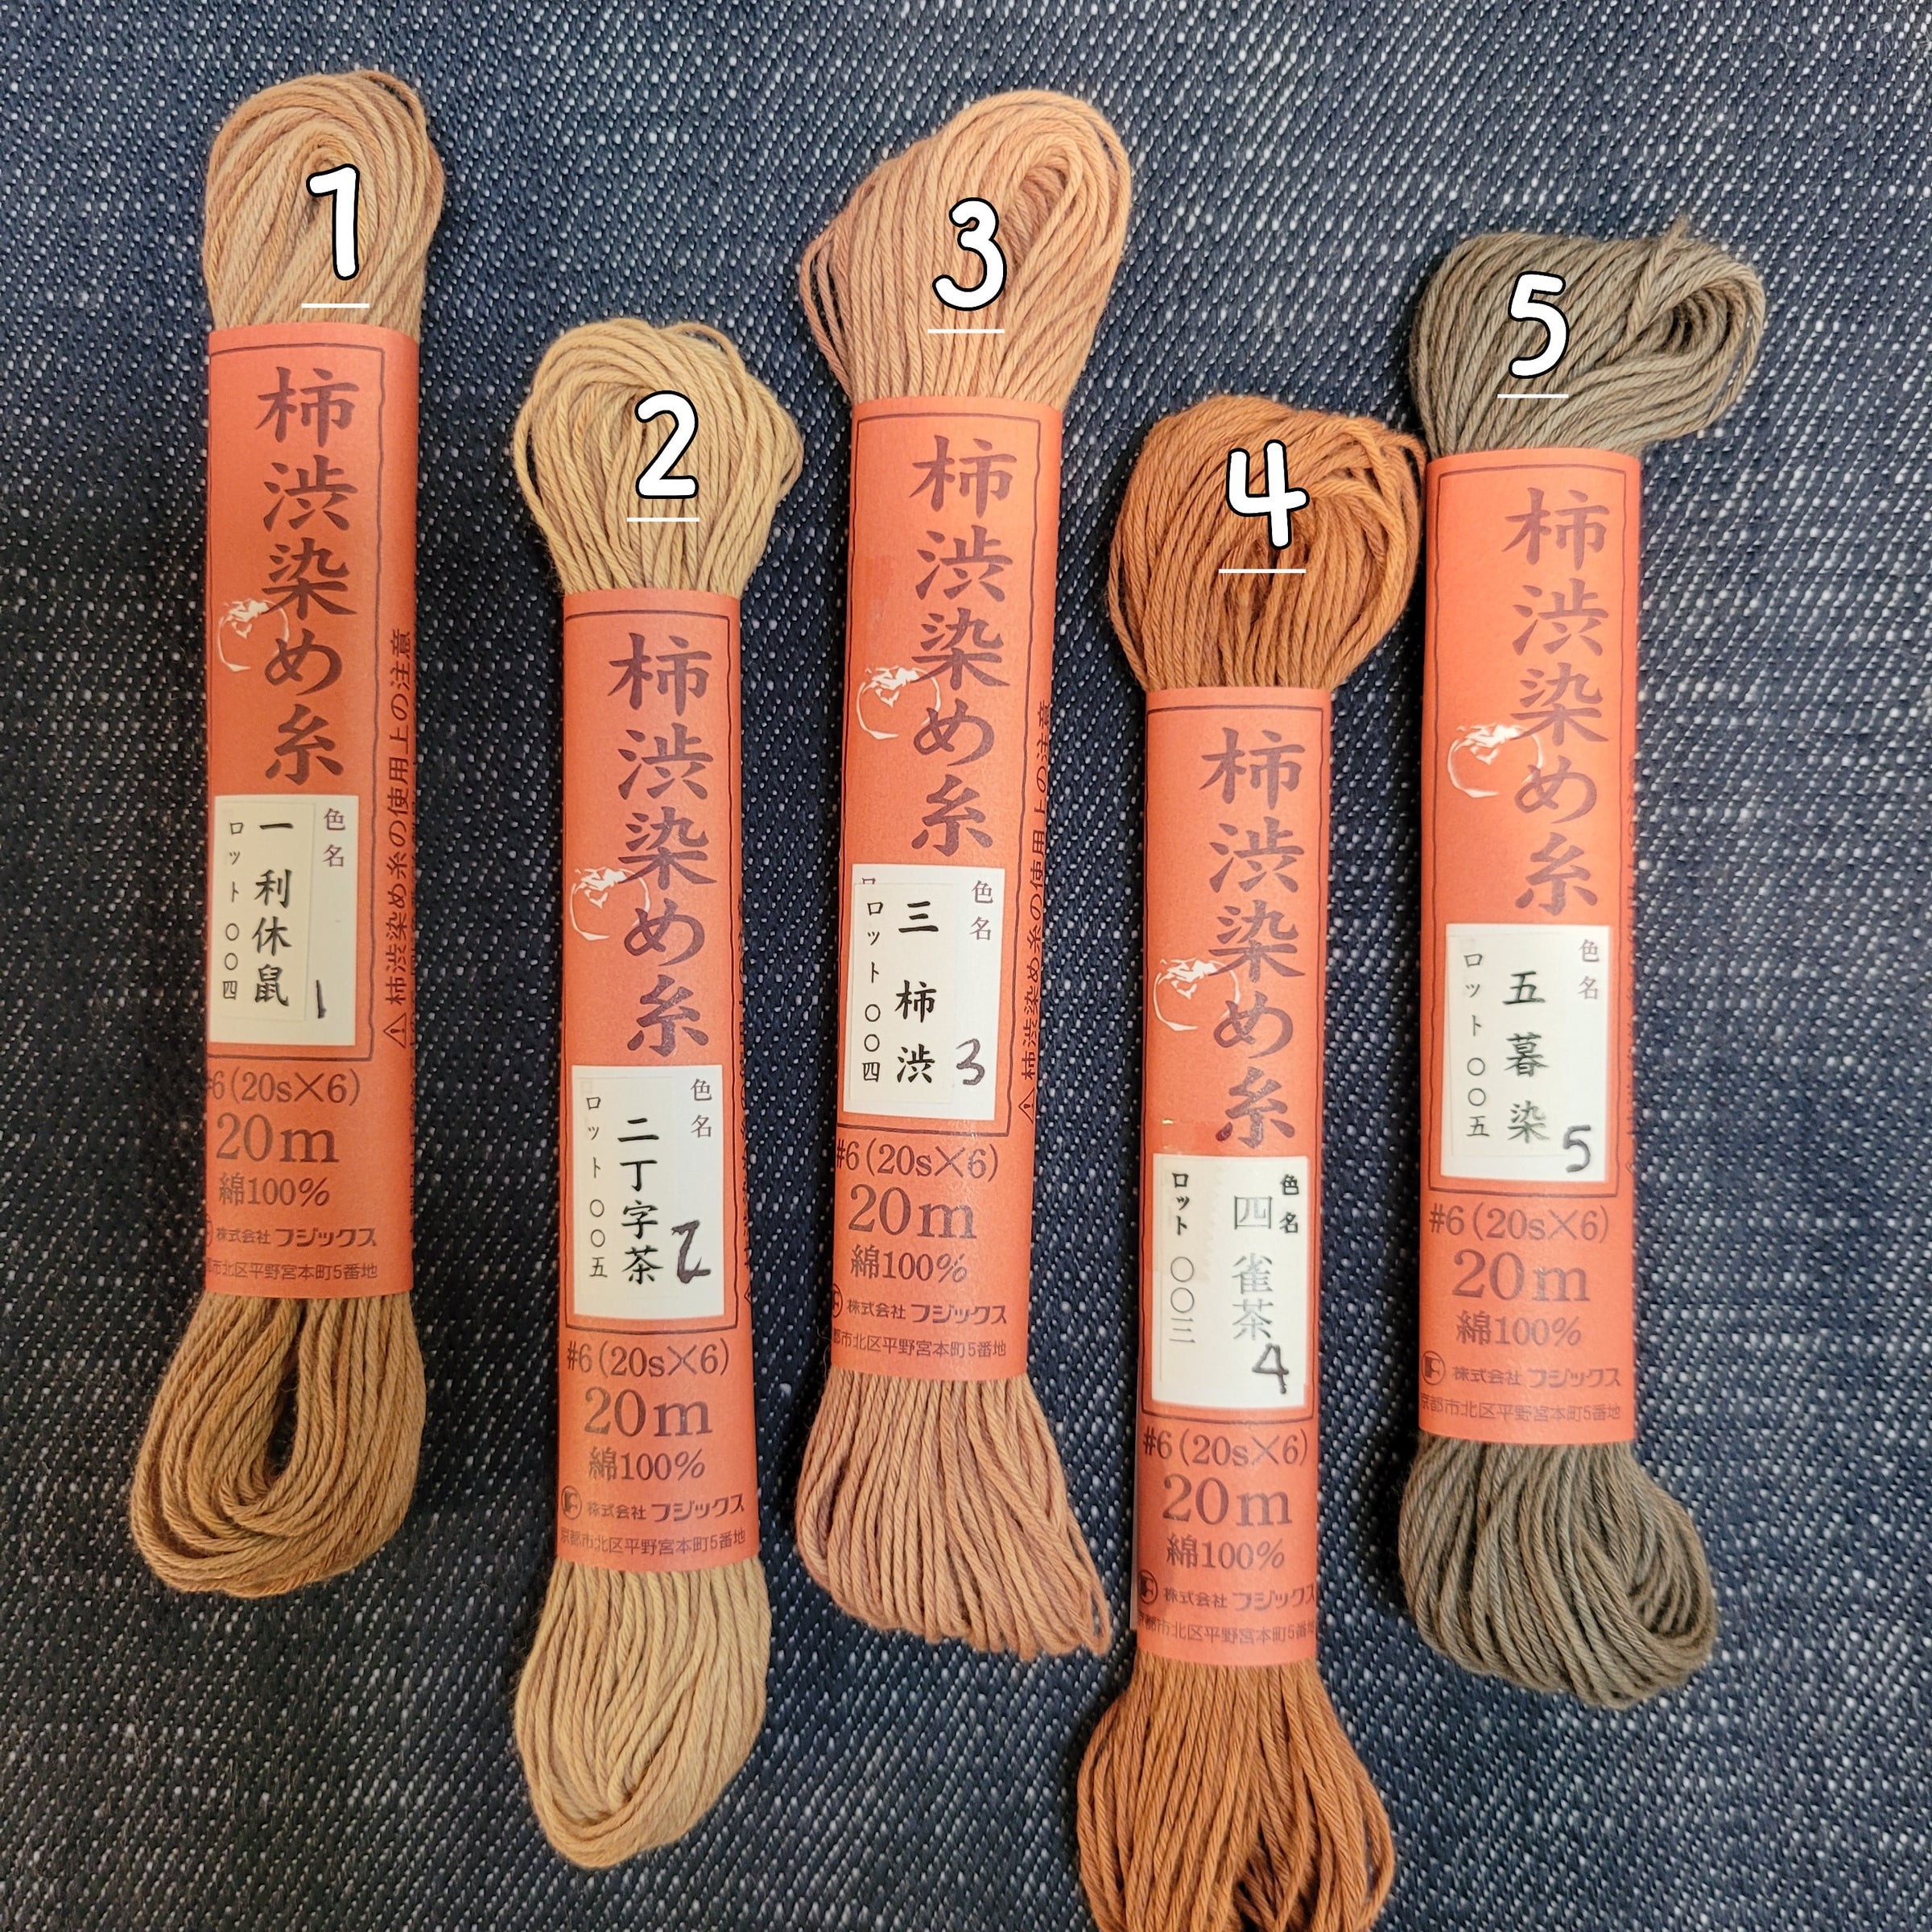 Persimmon Dyed Sashiko Thread Size 6 by Fujix Thread Company- Japan